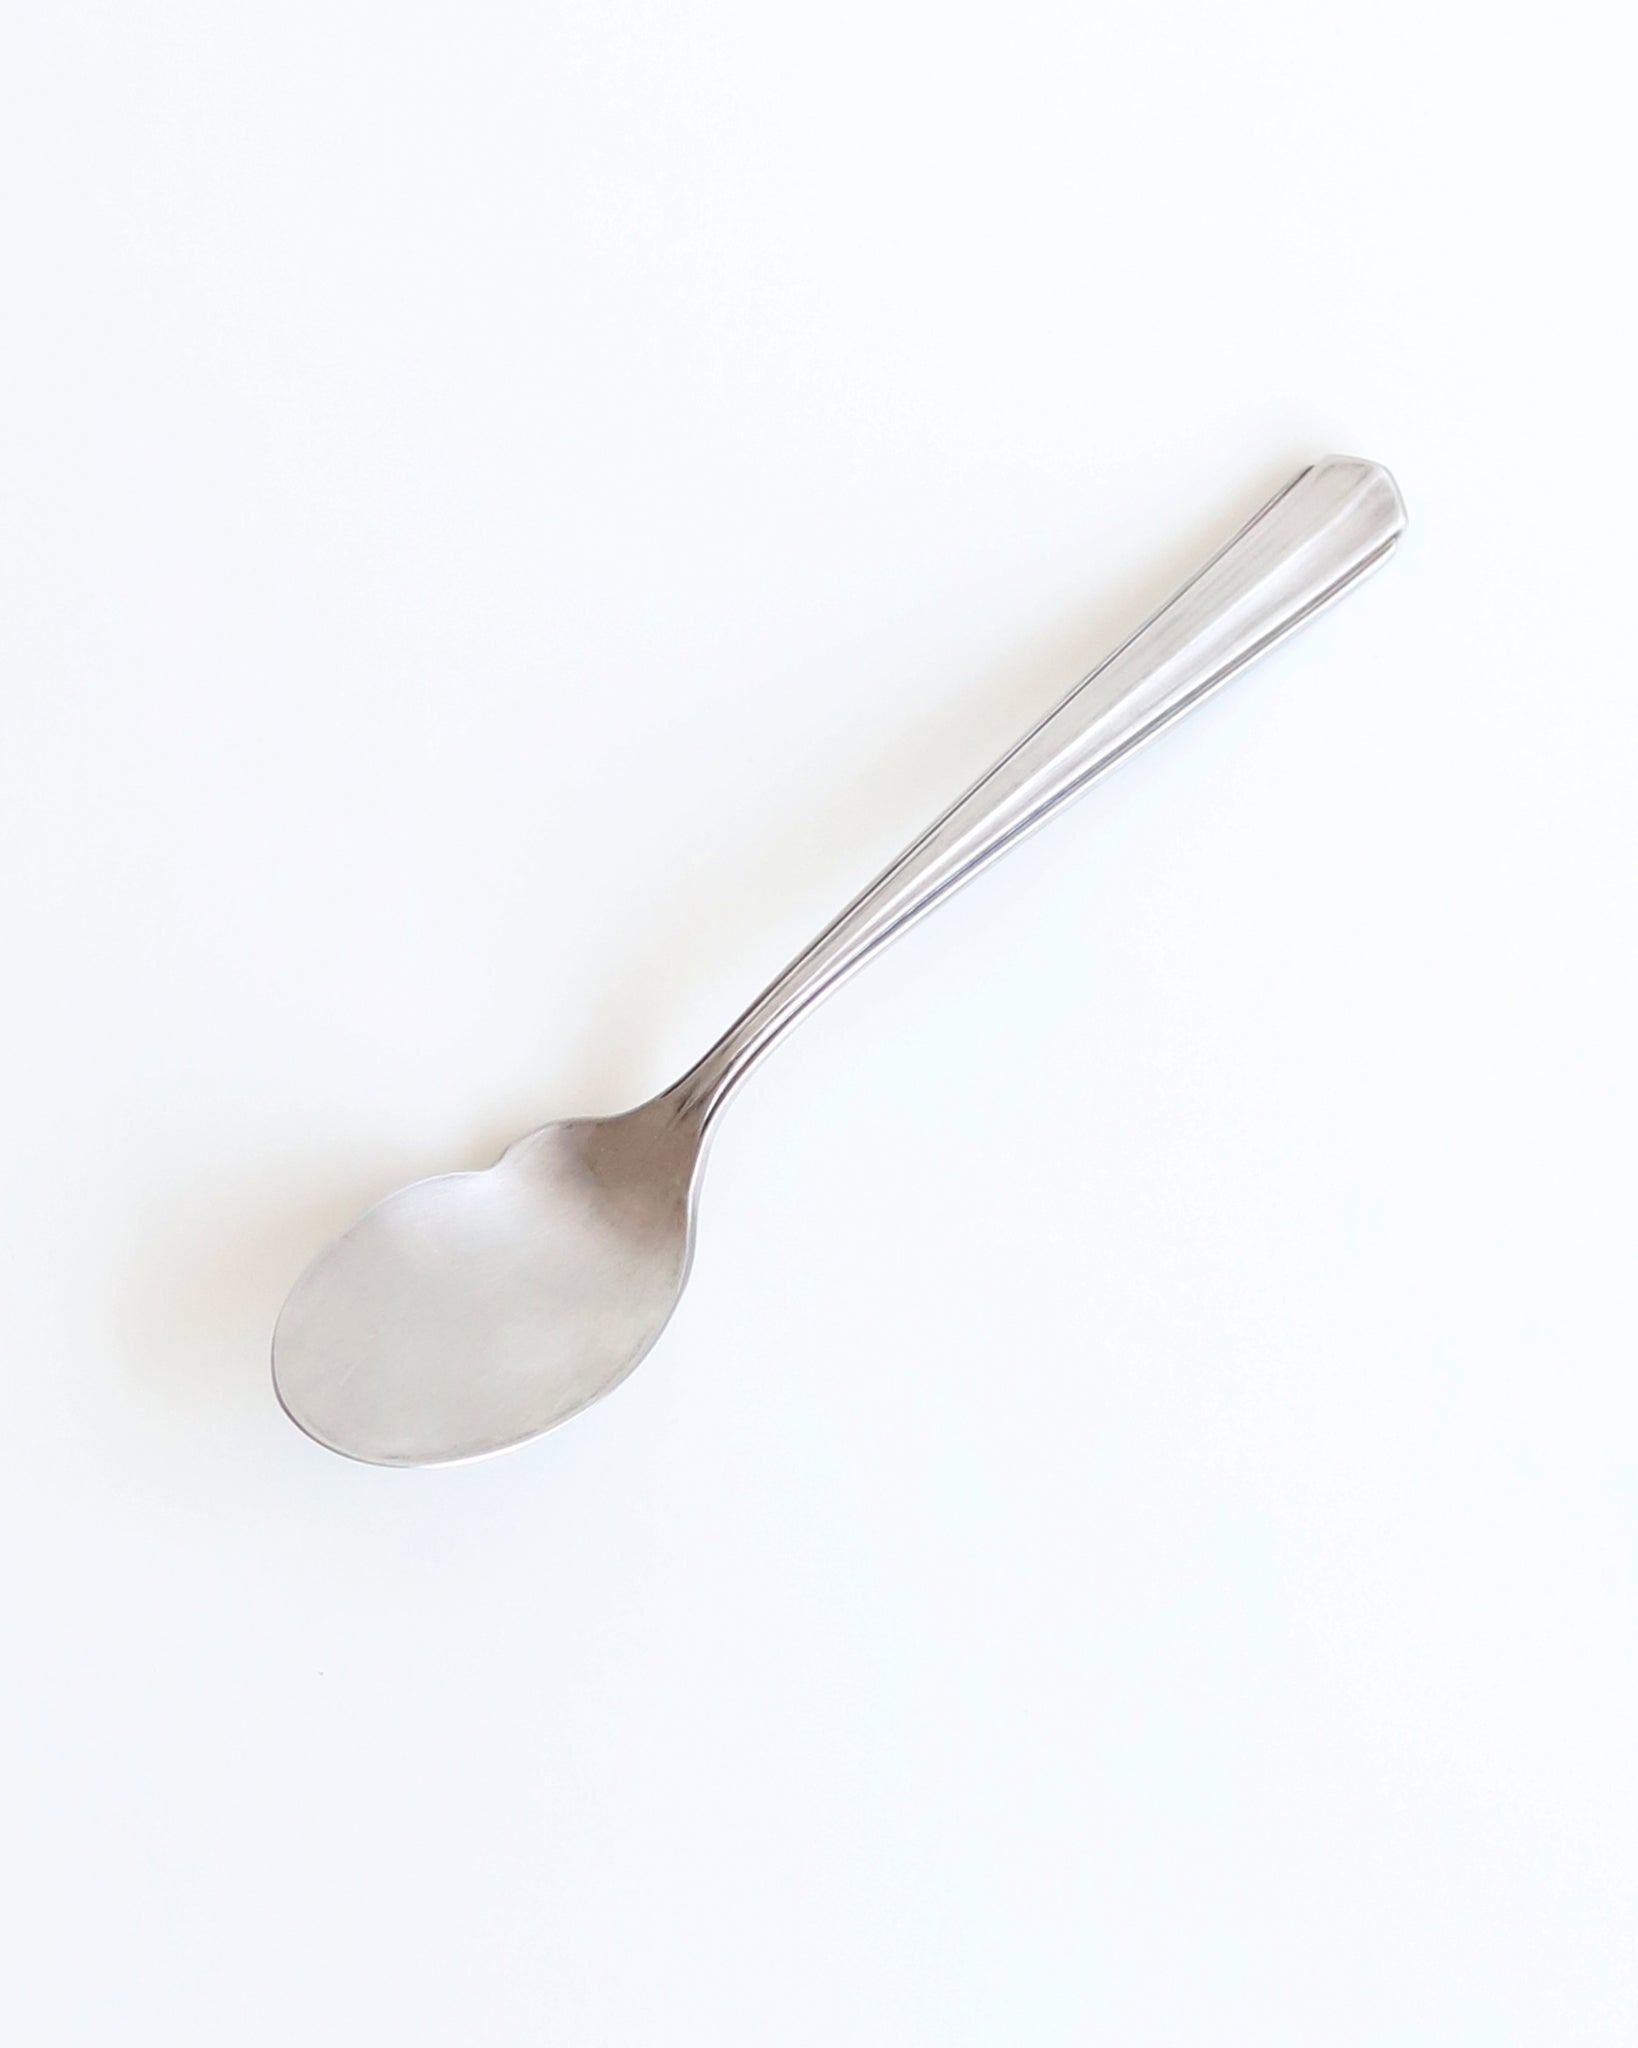 Fish Spoon - A / Ryo-122